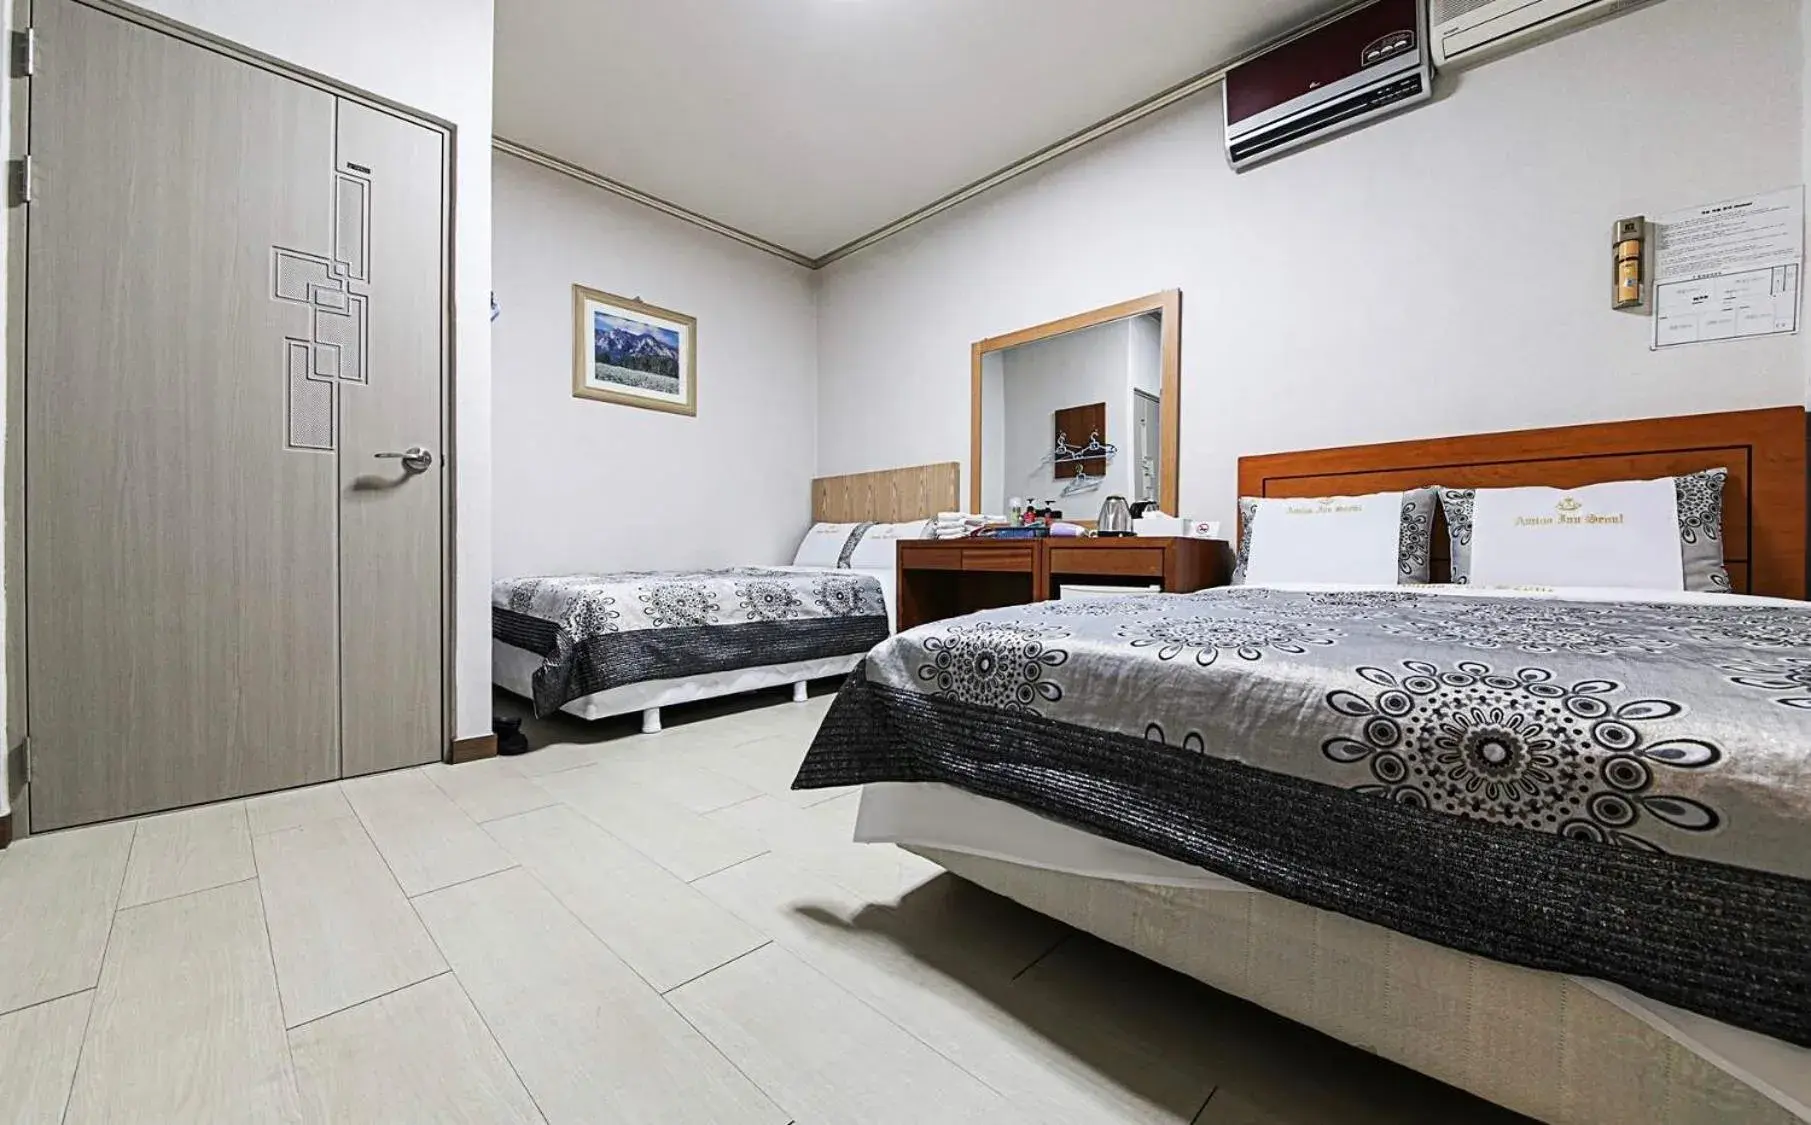 Bed in Amiga Inn Dongdaemun Hotel